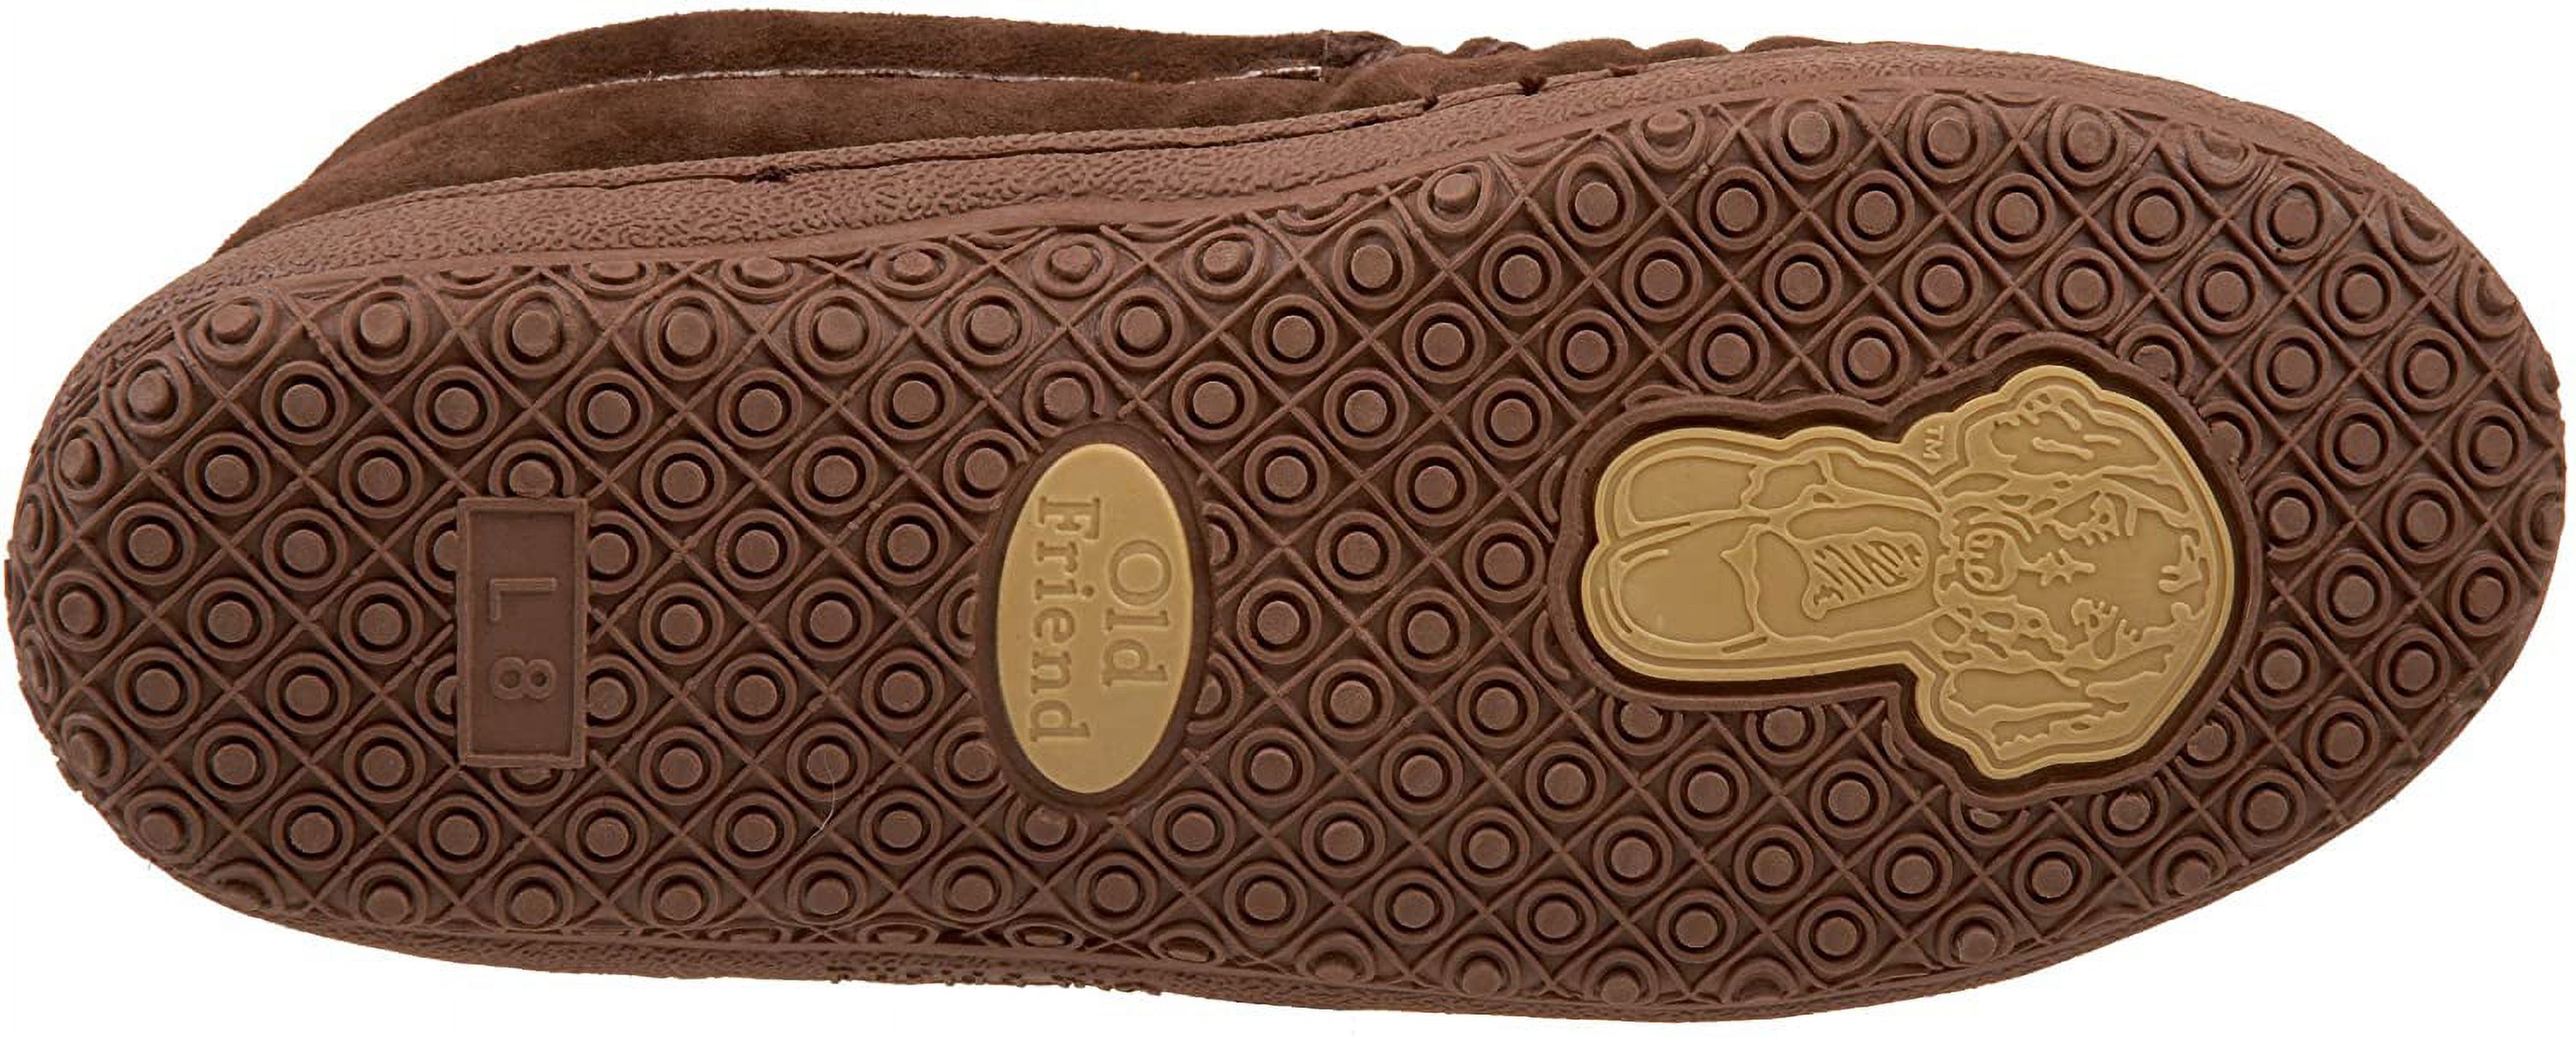 Old Friend Footwear Women's Brown Loafer Moccasin 481166-L (6) - image 4 of 7